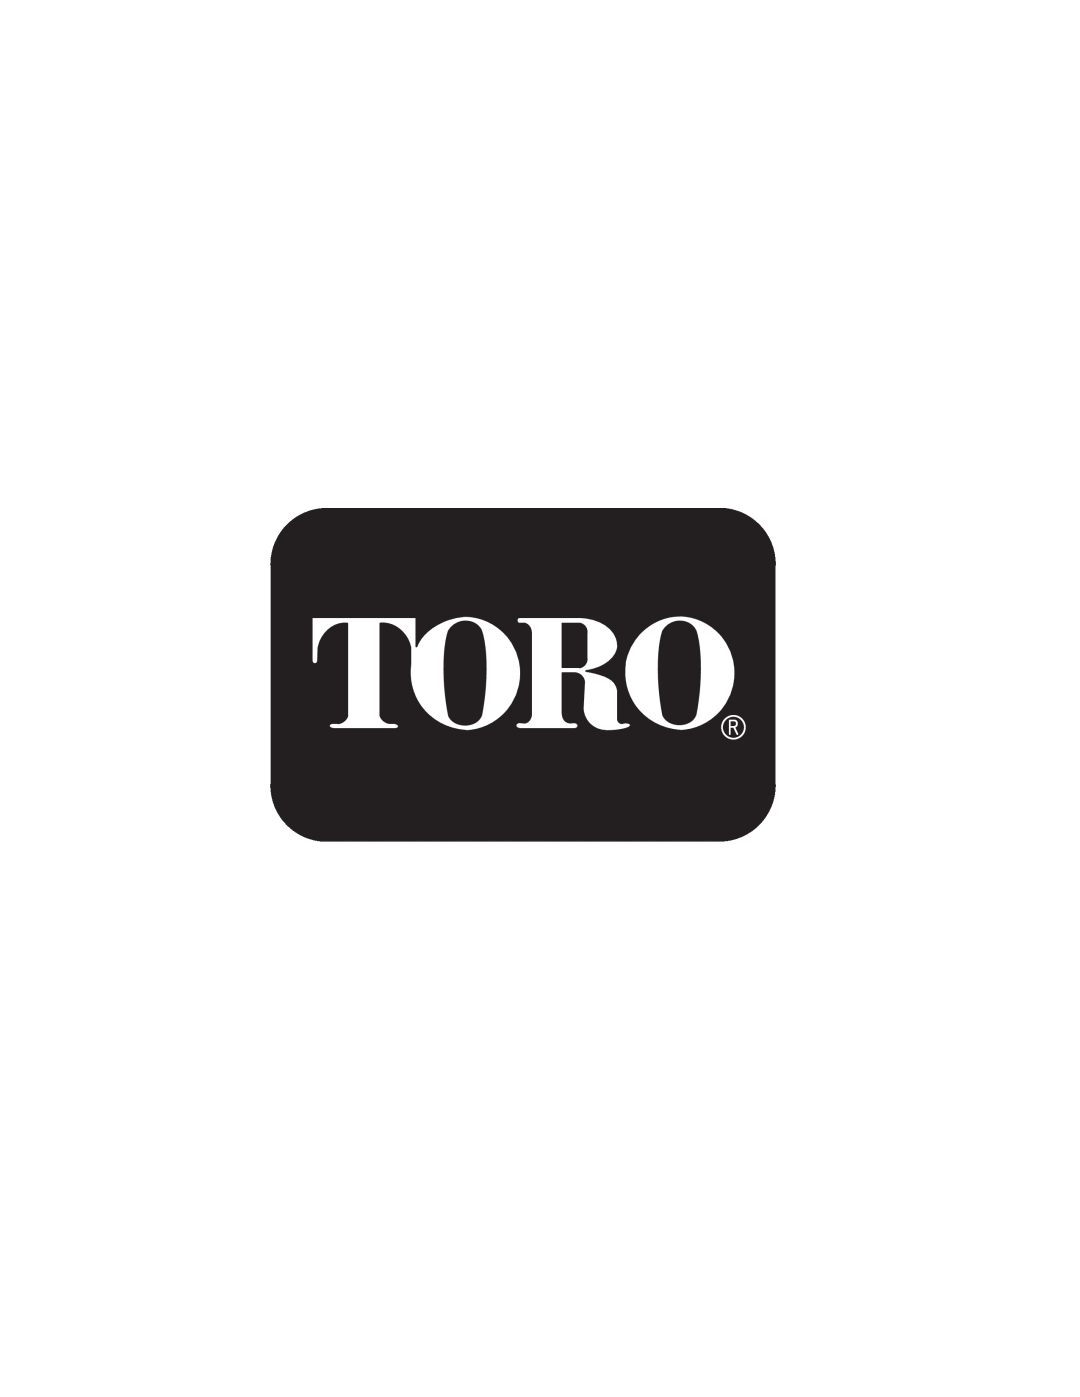 Toro 30402210000001 and Up manual 